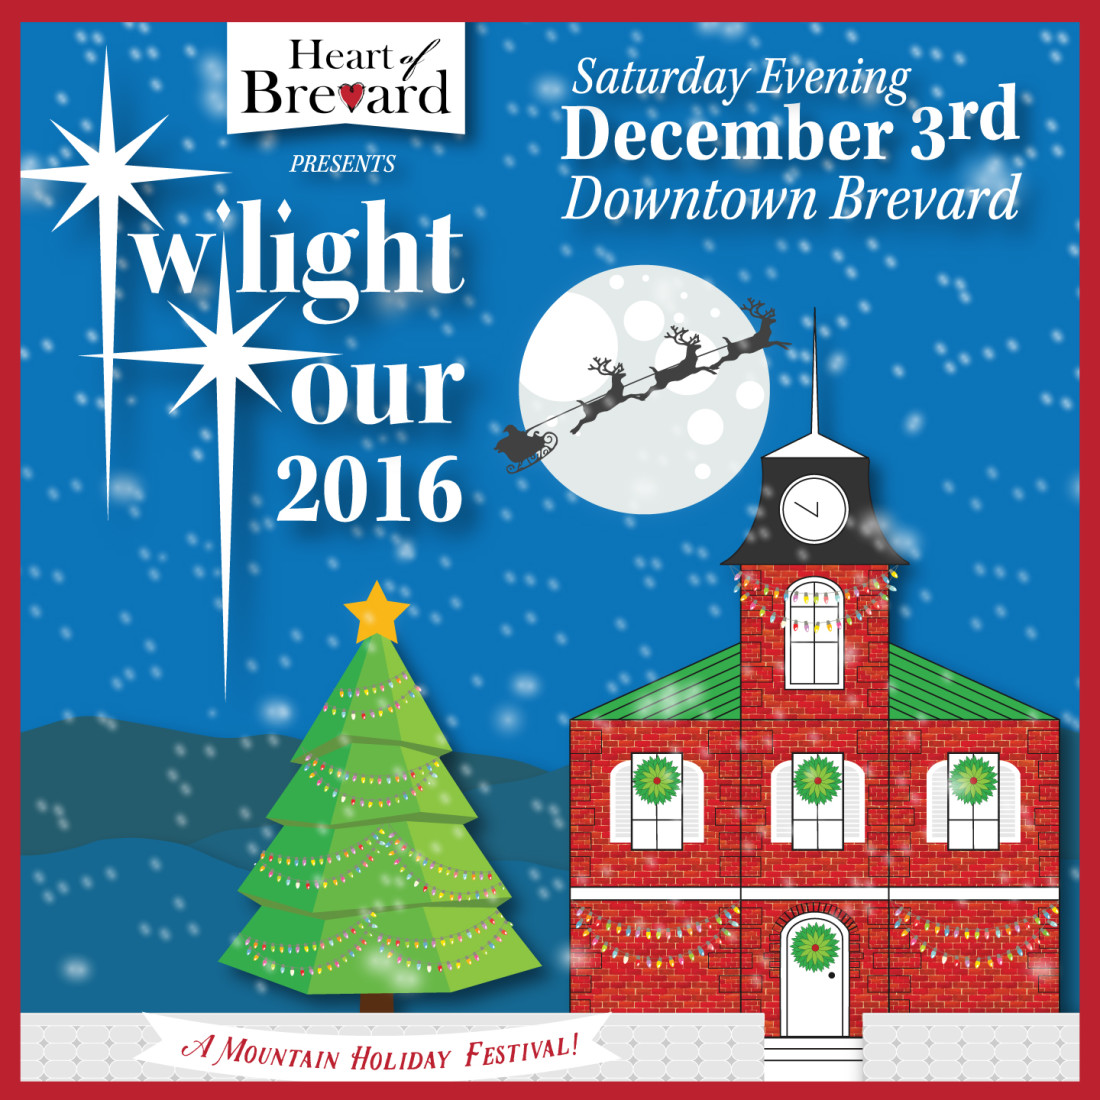 Brevard hosts 45th annual Christmas parade and Twilight Tour Dec. 3